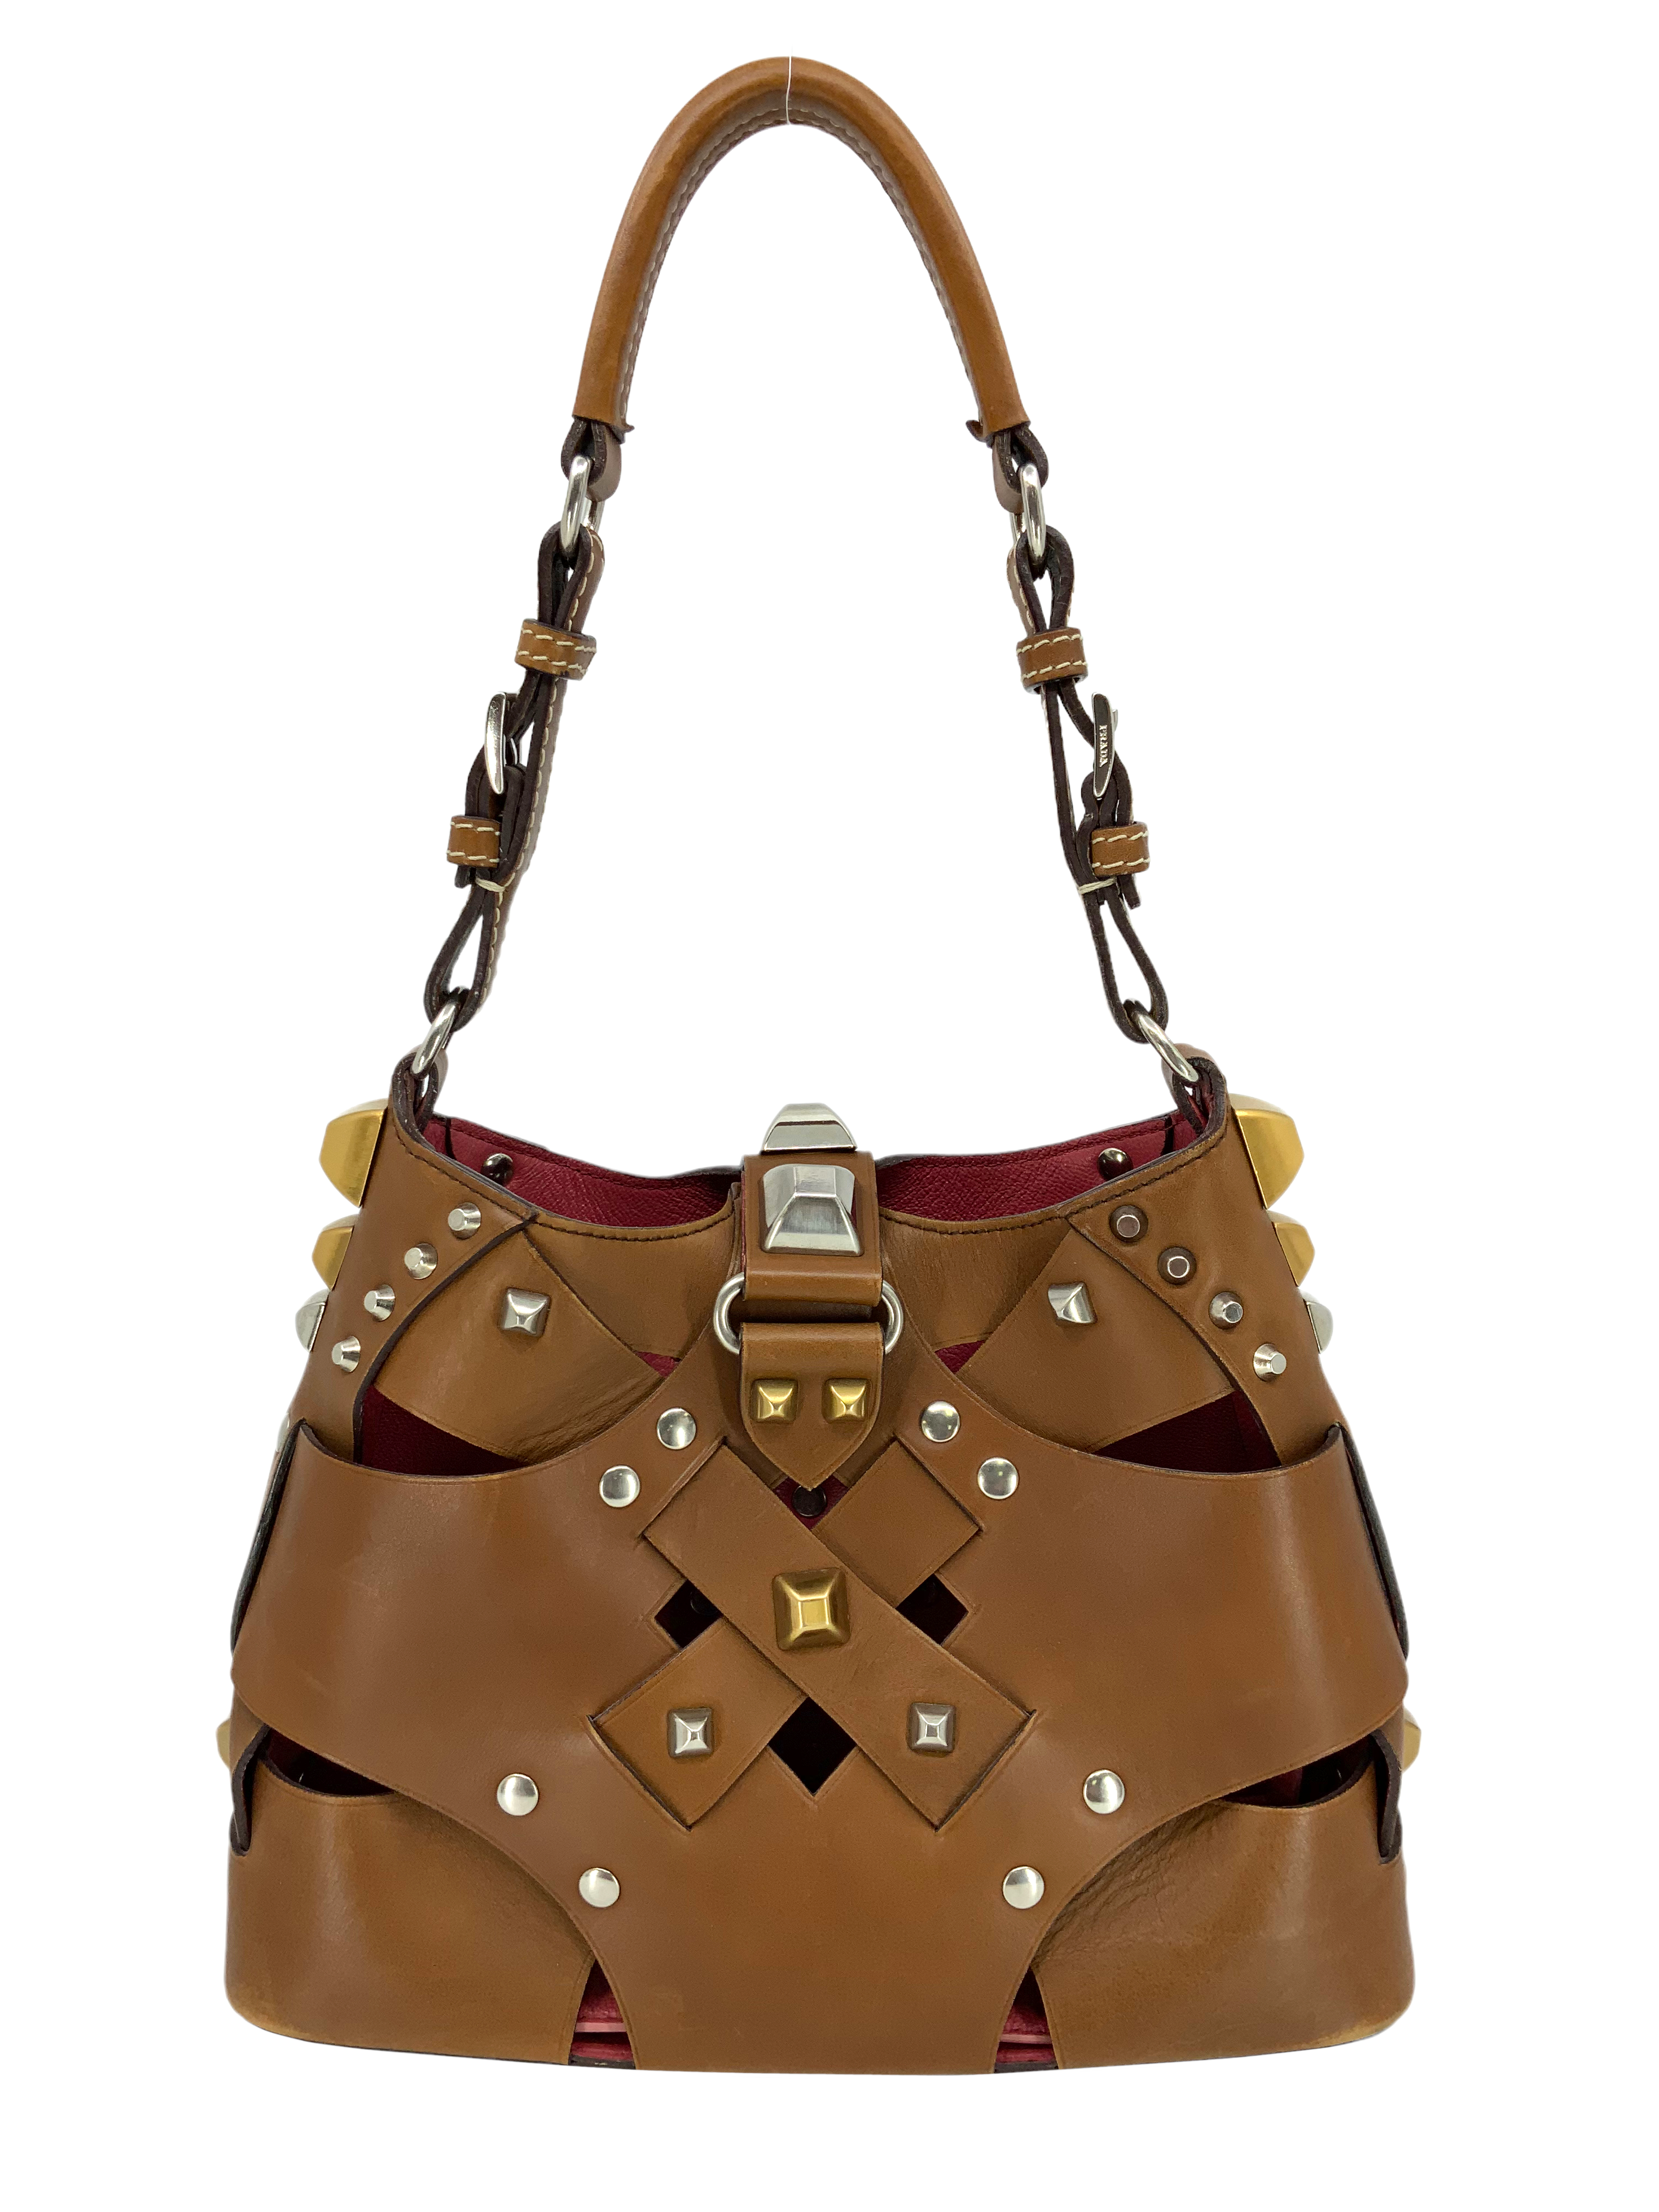 PRADA Leather Bags & Handbags for Women, Authenticity Guaranteed